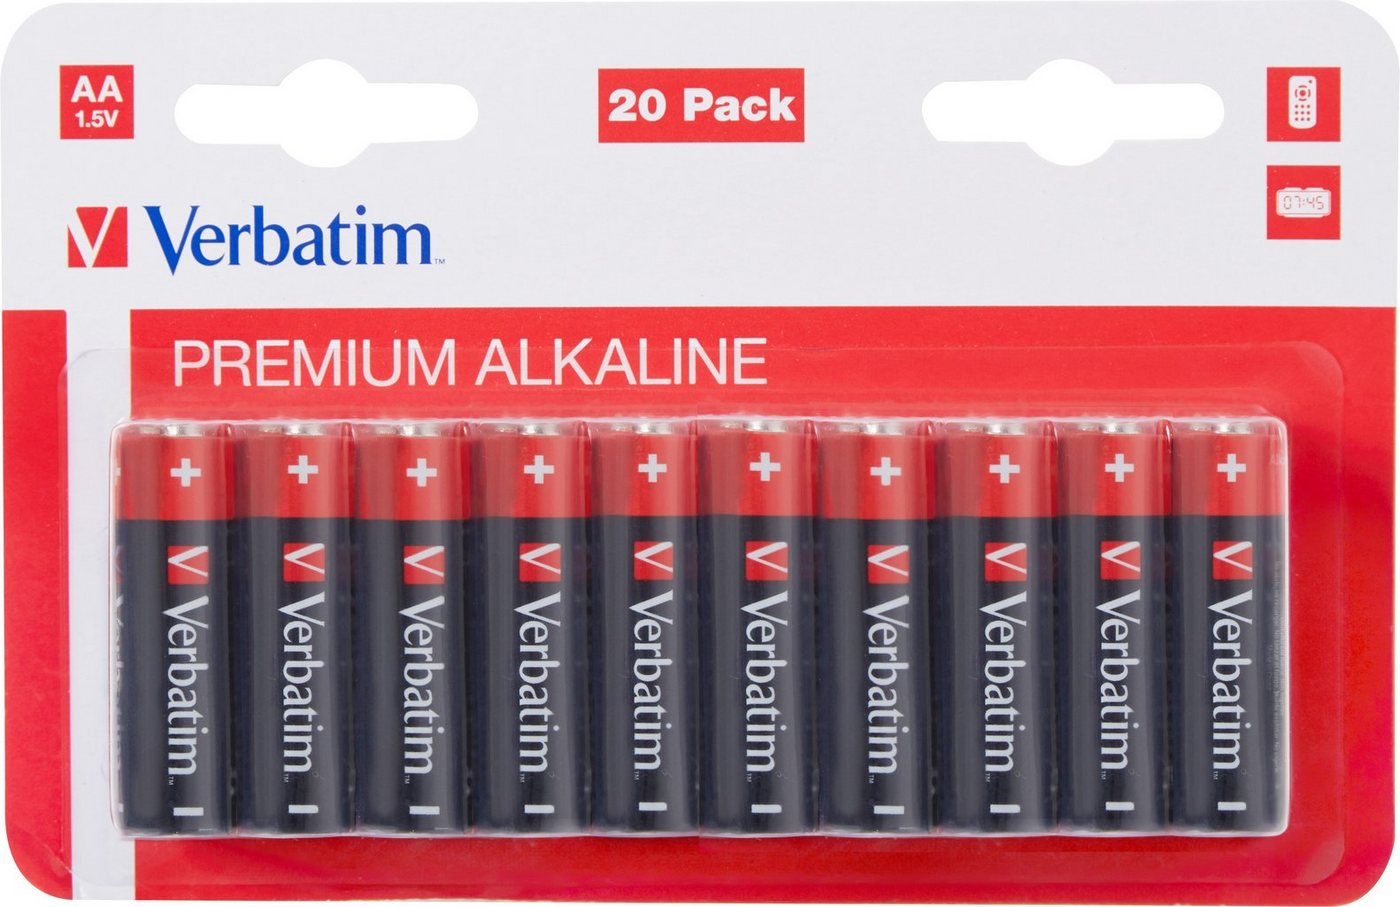 Verbatim Verbatim Batterie Alkaline, Mignon, AA, LR06, 1.5V Premium, Retail Bl Batterie von Verbatim